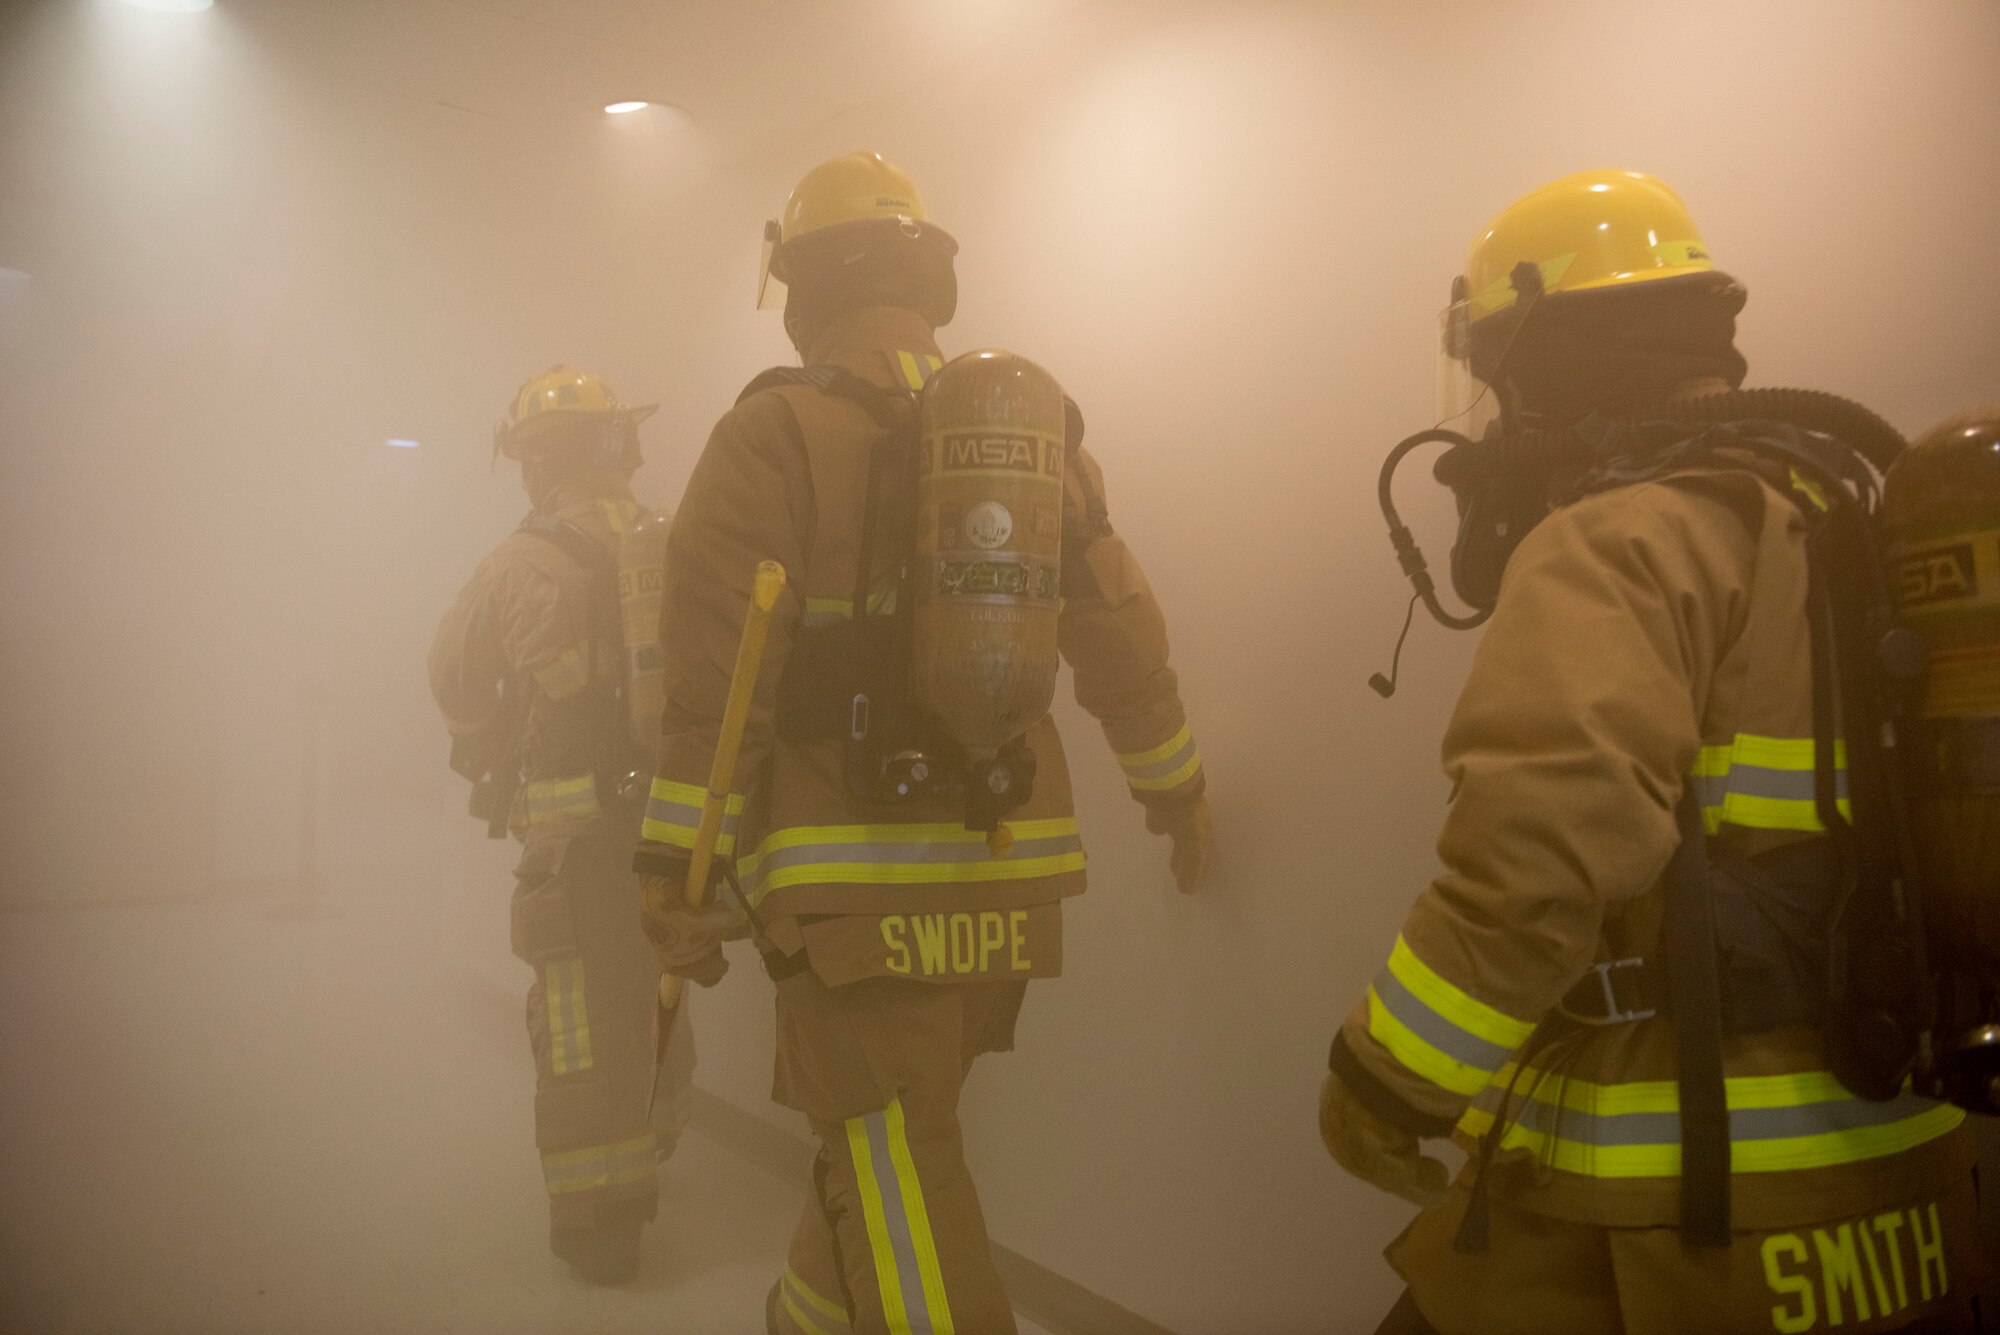 Fire fighters walk through a smokey hallway.